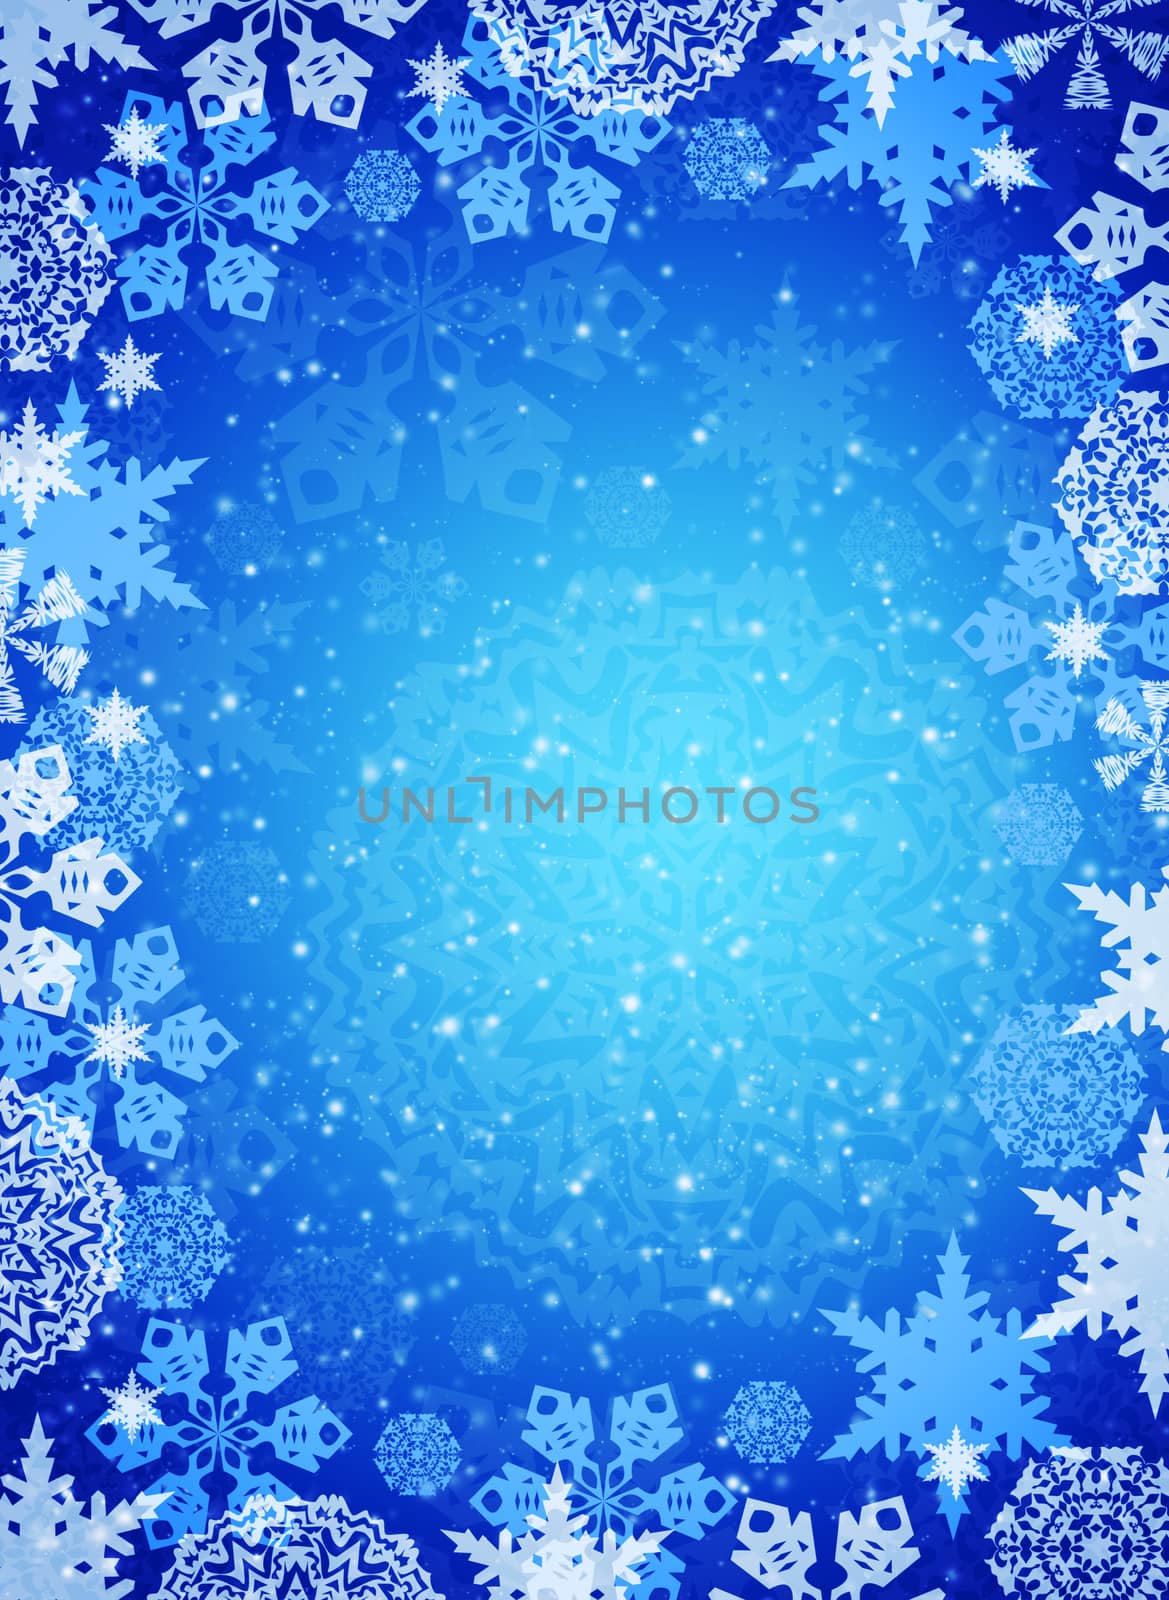 Christmas frame. White snowflakes on the blue background